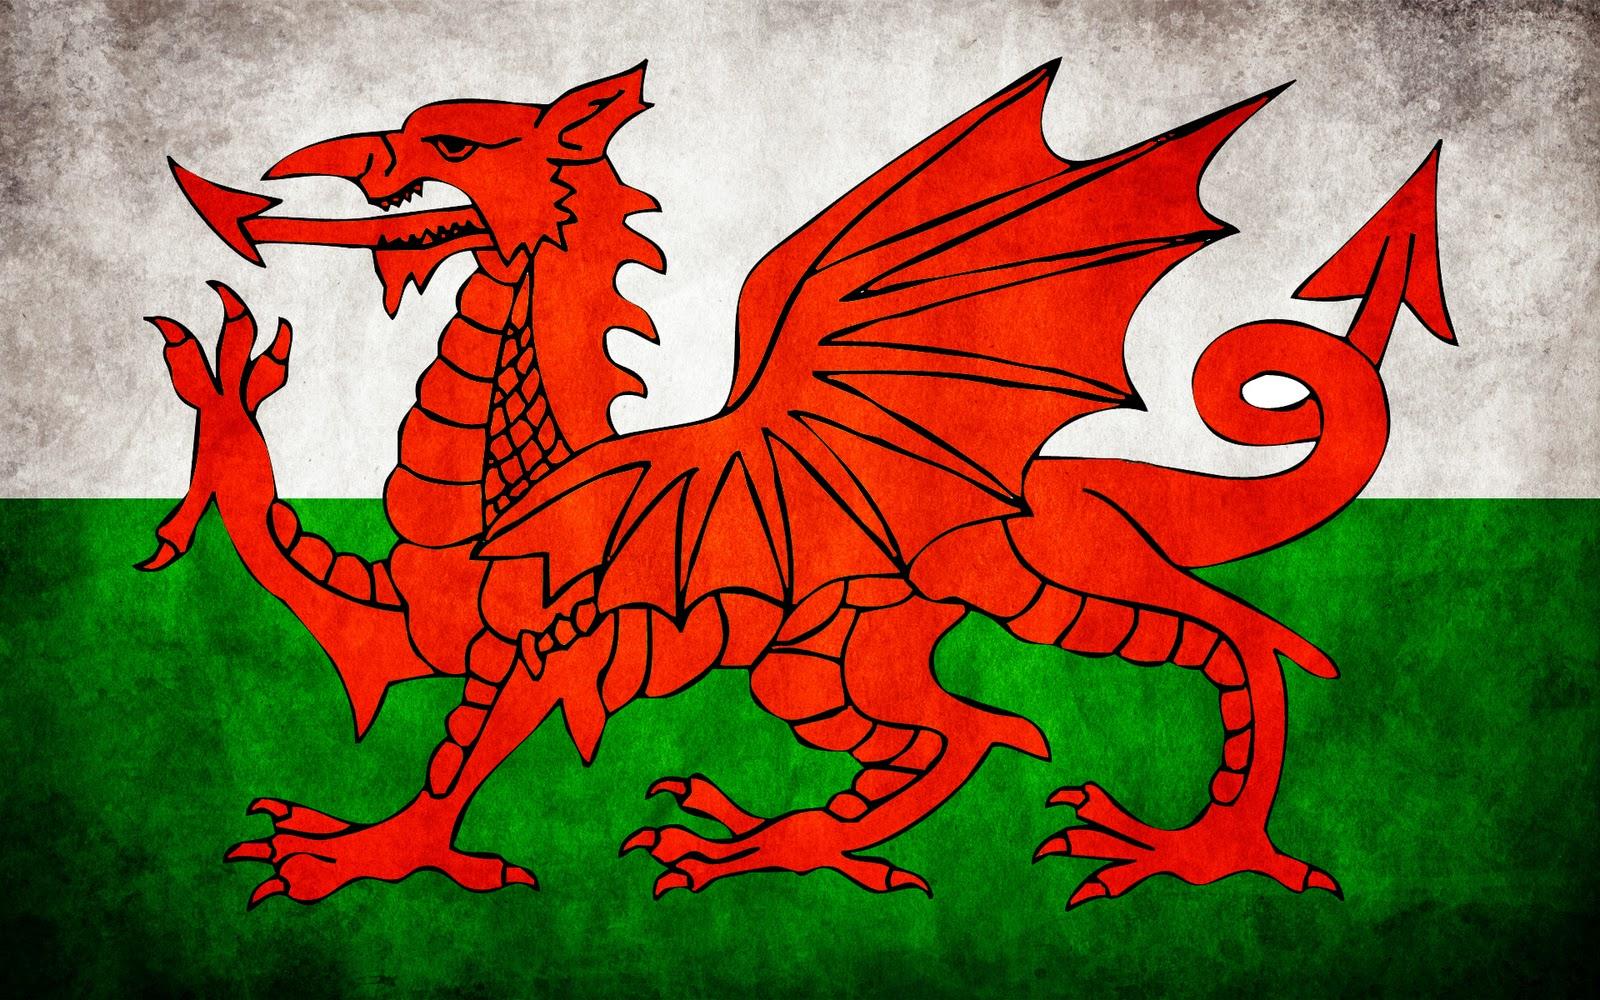 Wales National Football Team 2015 The Dragons HD Desktop Wallpaper